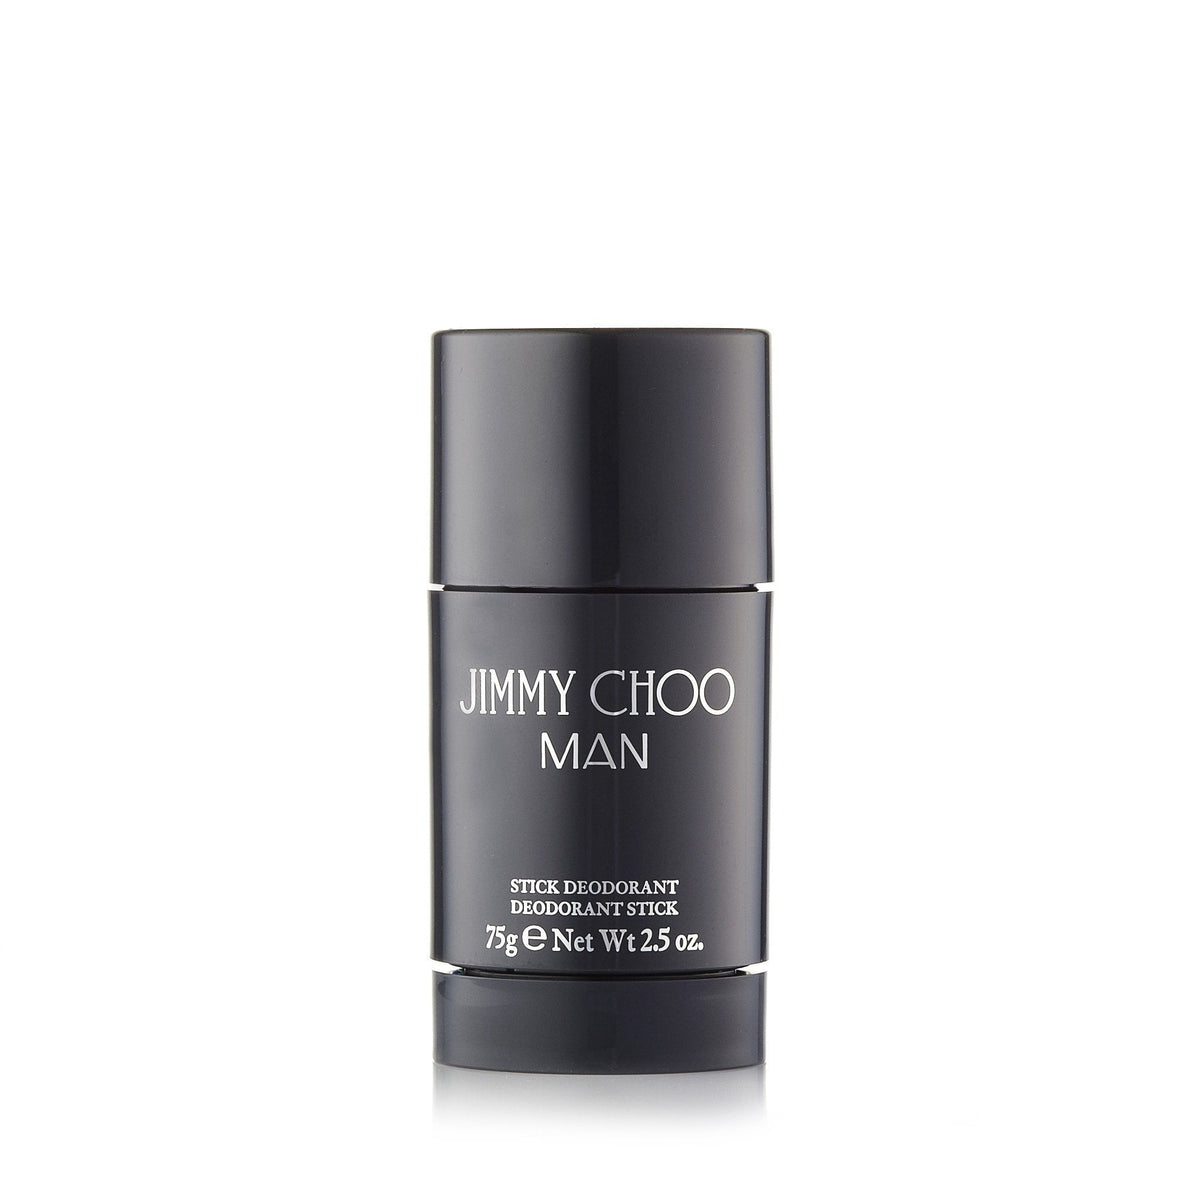 Jimmy Choo Man Deodorant for Men by Jimmy Choo 2.5 oz.